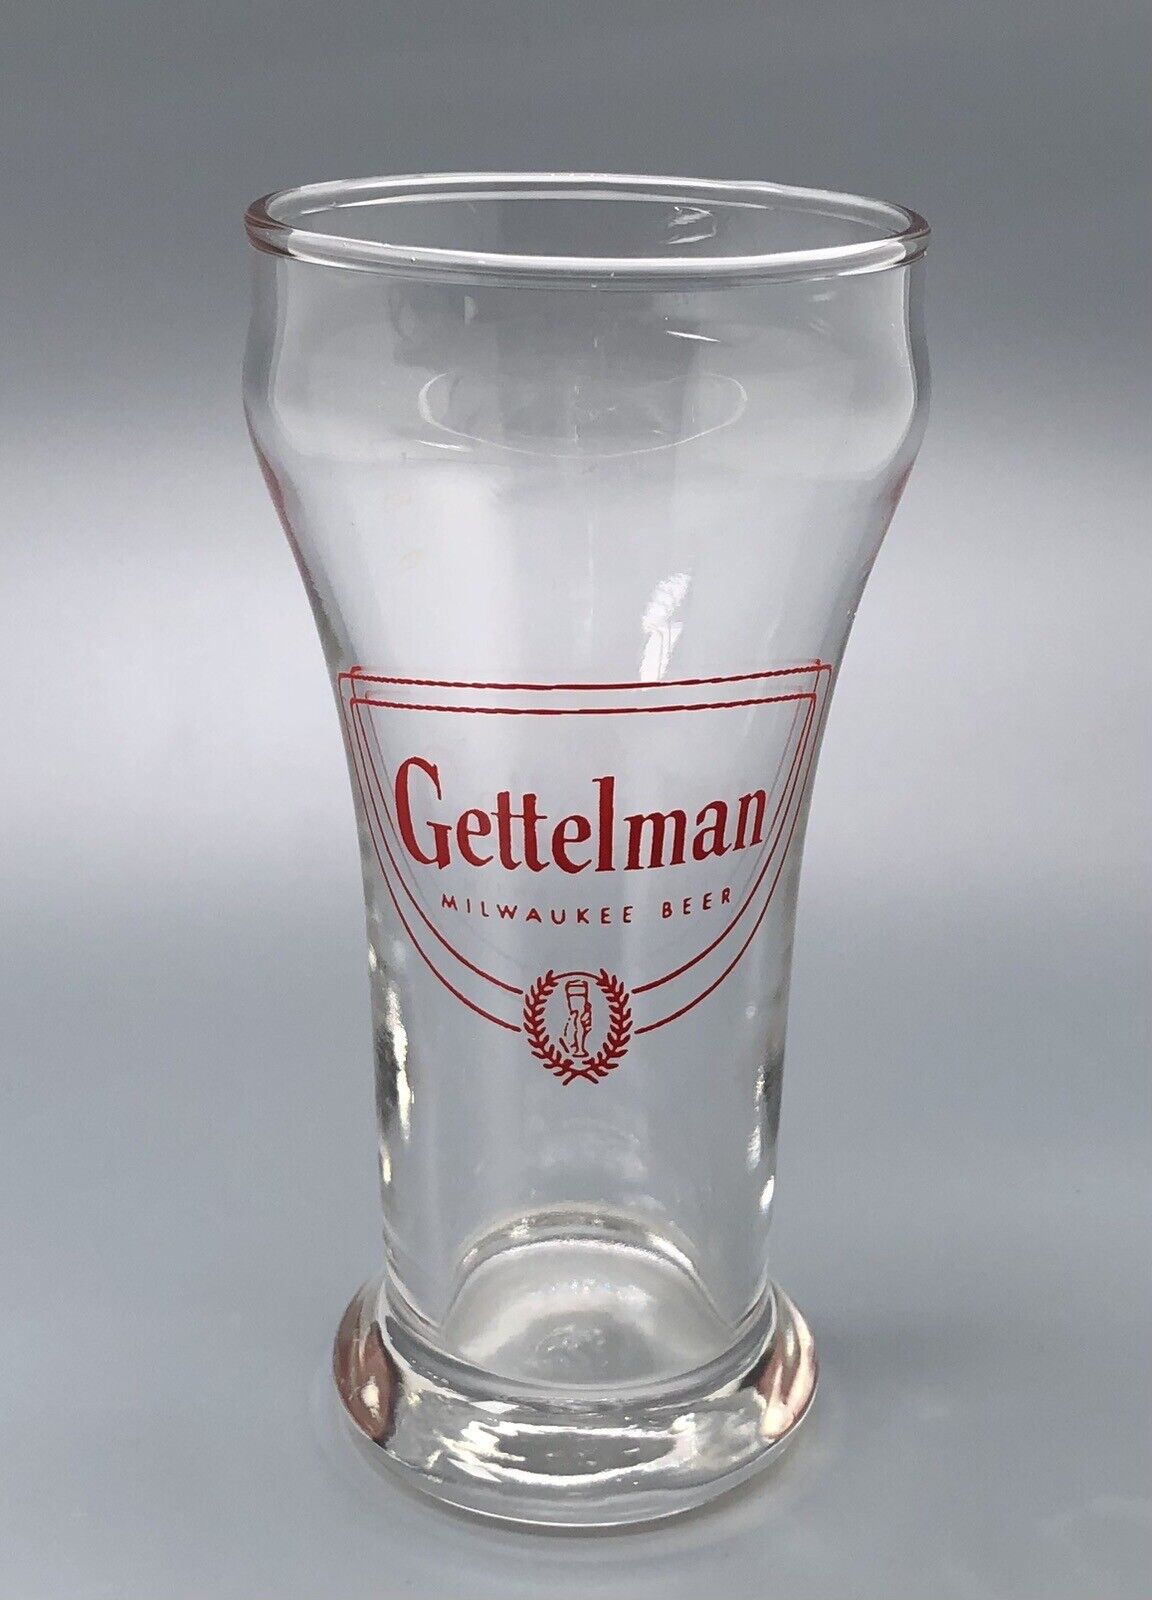 Gettelman Beer Sham Glass / Vtg Barware Advertising / Man Cave Home Bar Decor